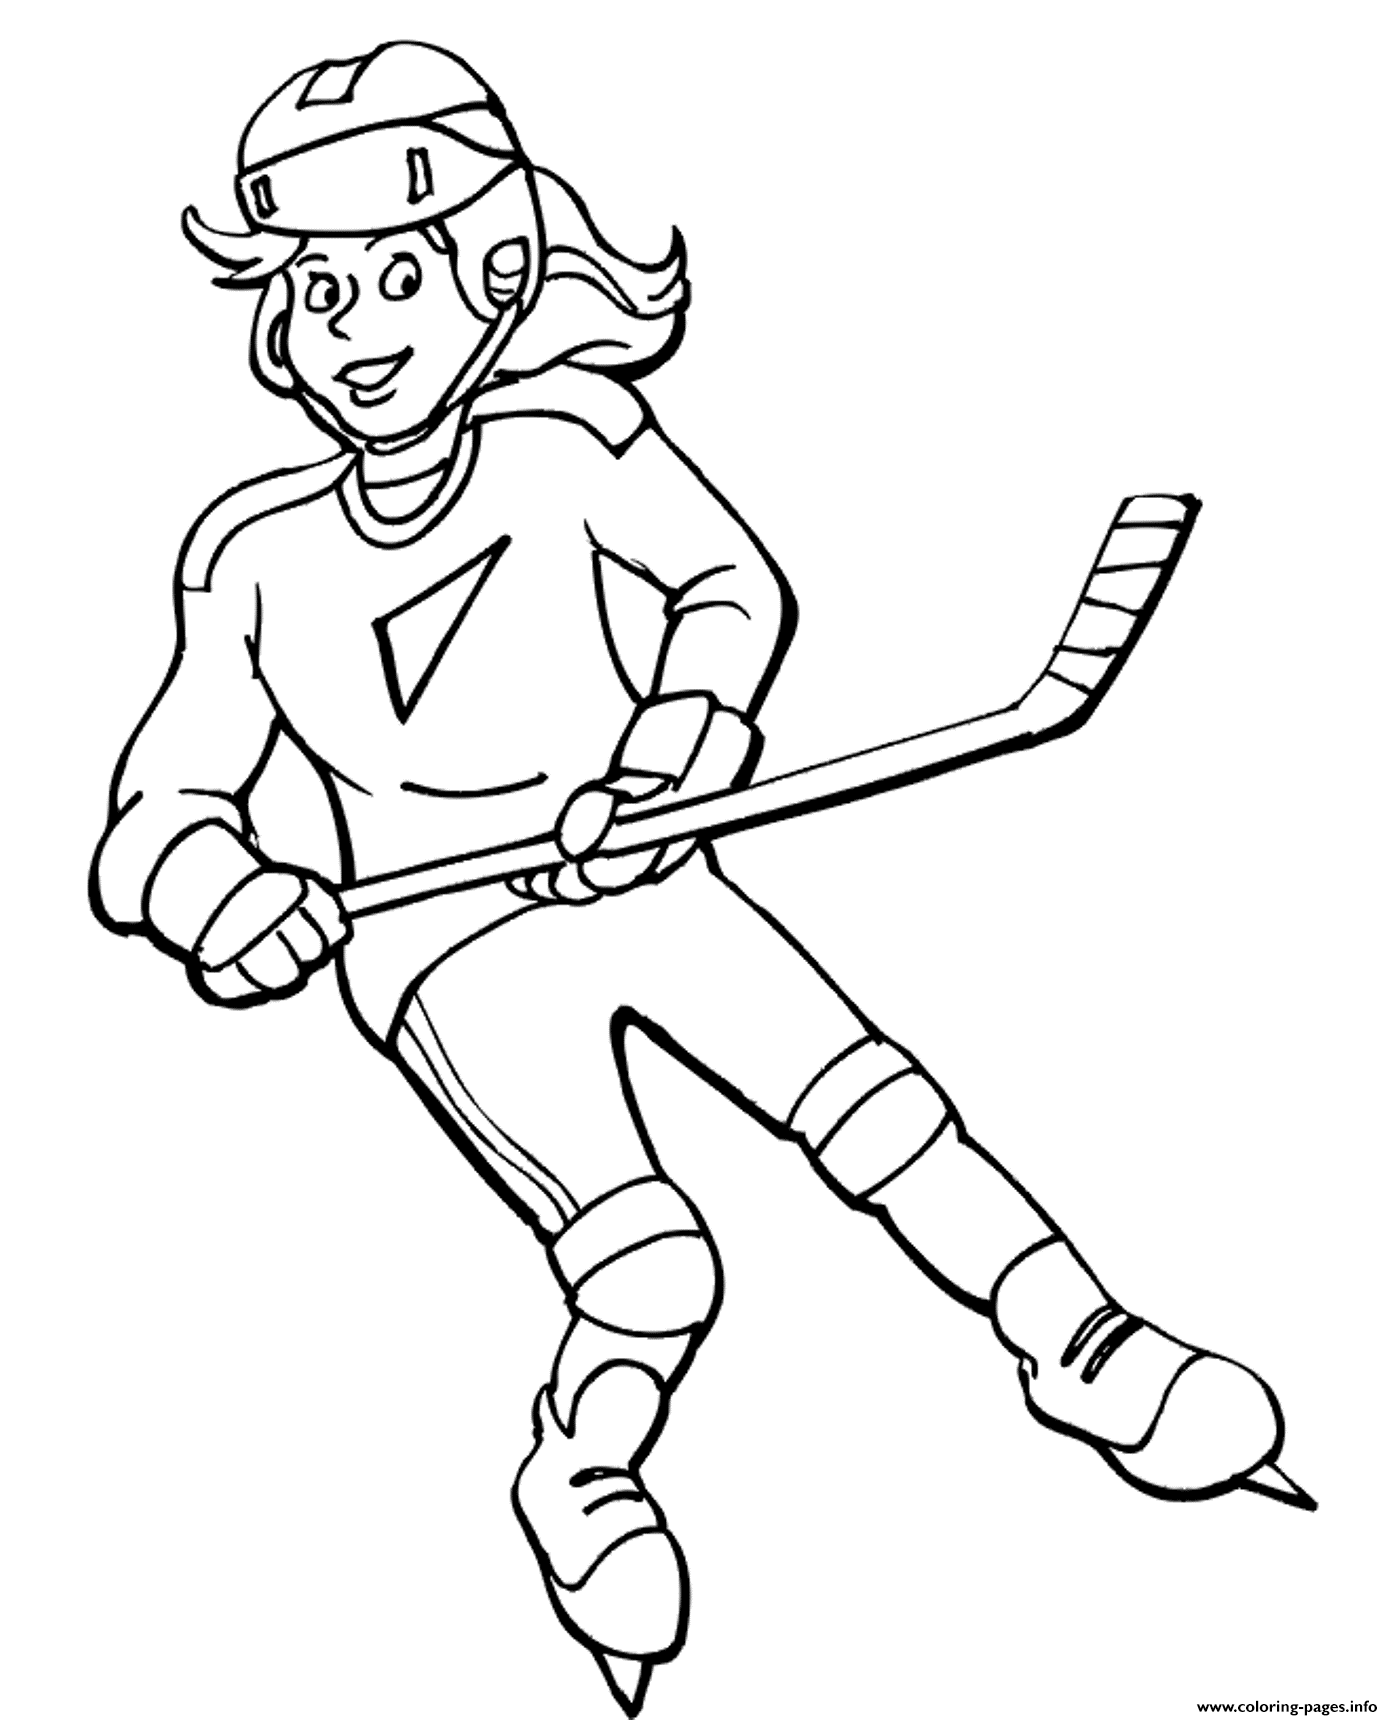 Hockey S Girl Player91e1 coloring